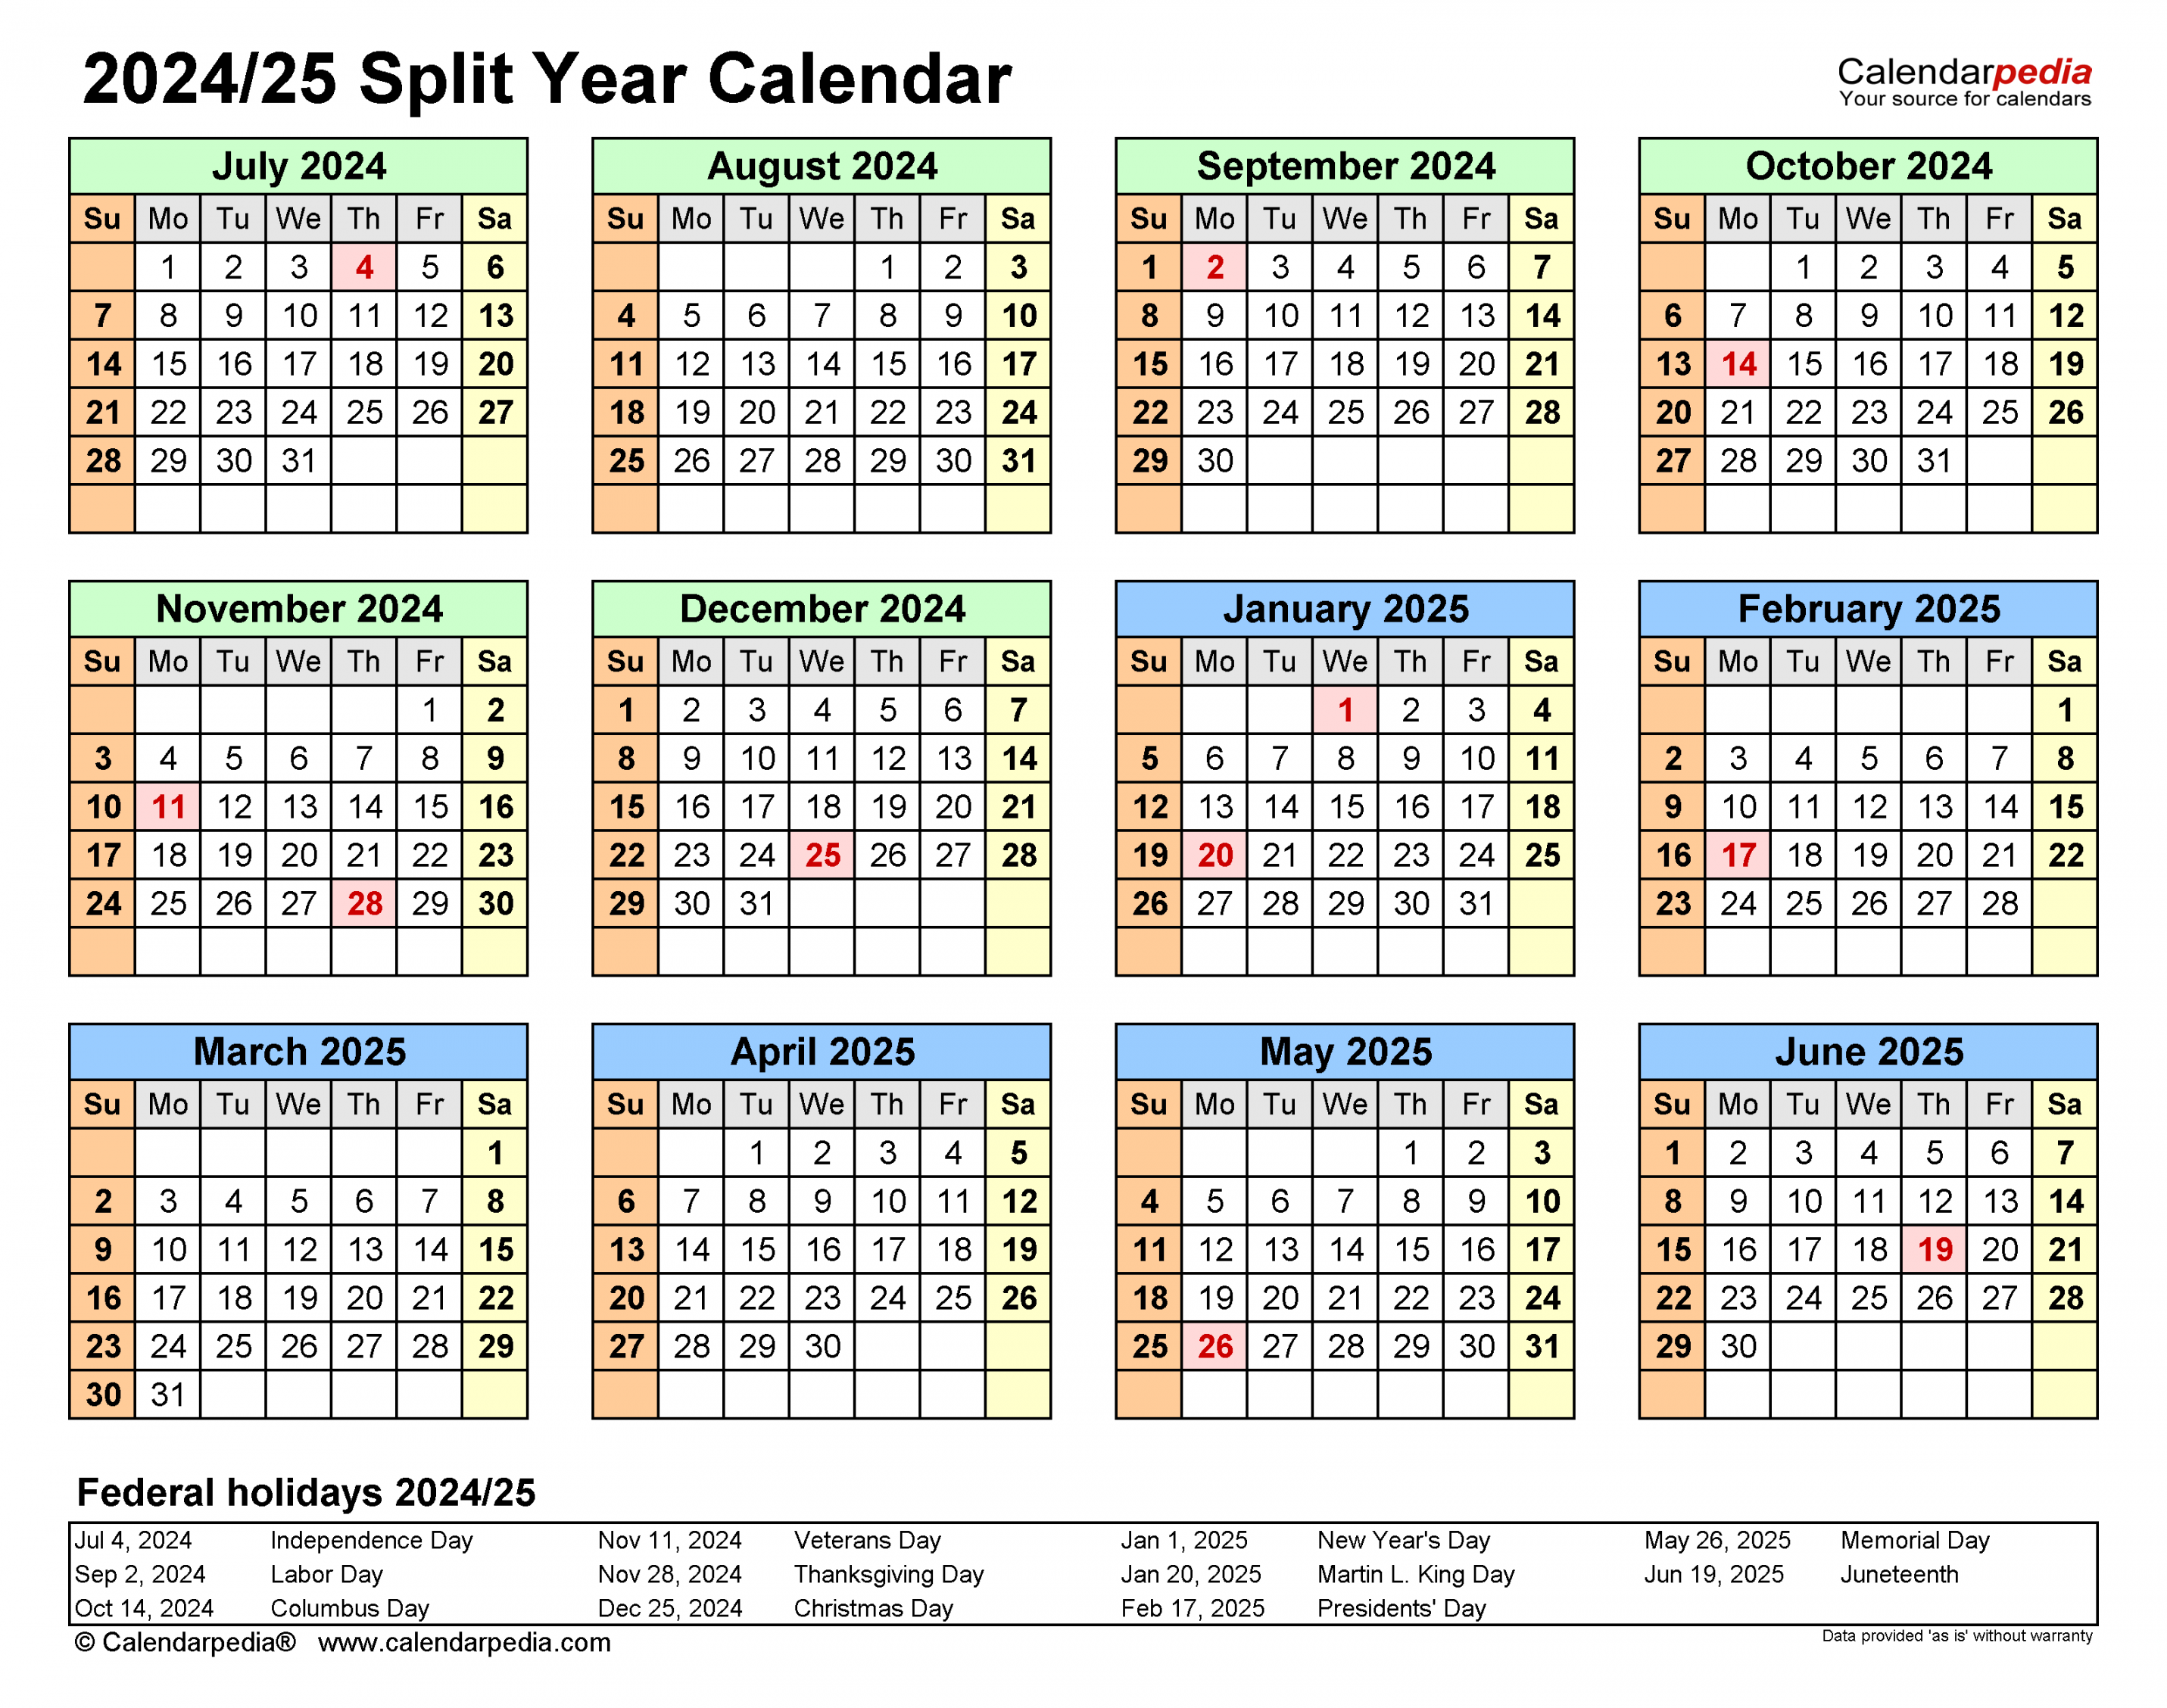 www calendarpedia com images large split year